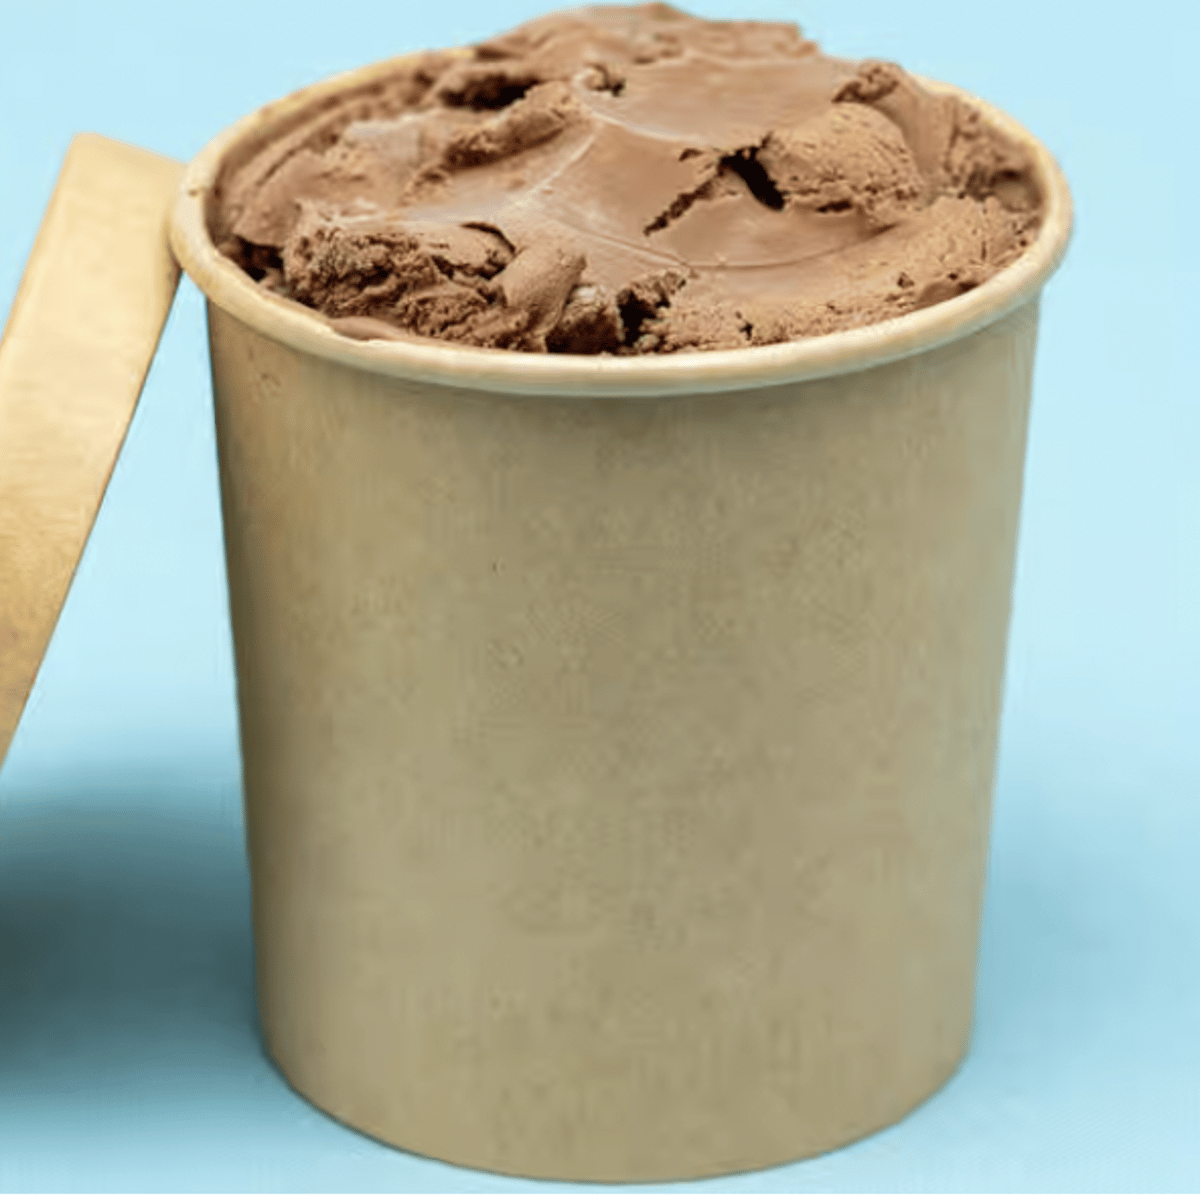 M&M's Chocolate Ice Cream Fun Cups With Chocolate Swirl 10pk, Cones & Cups